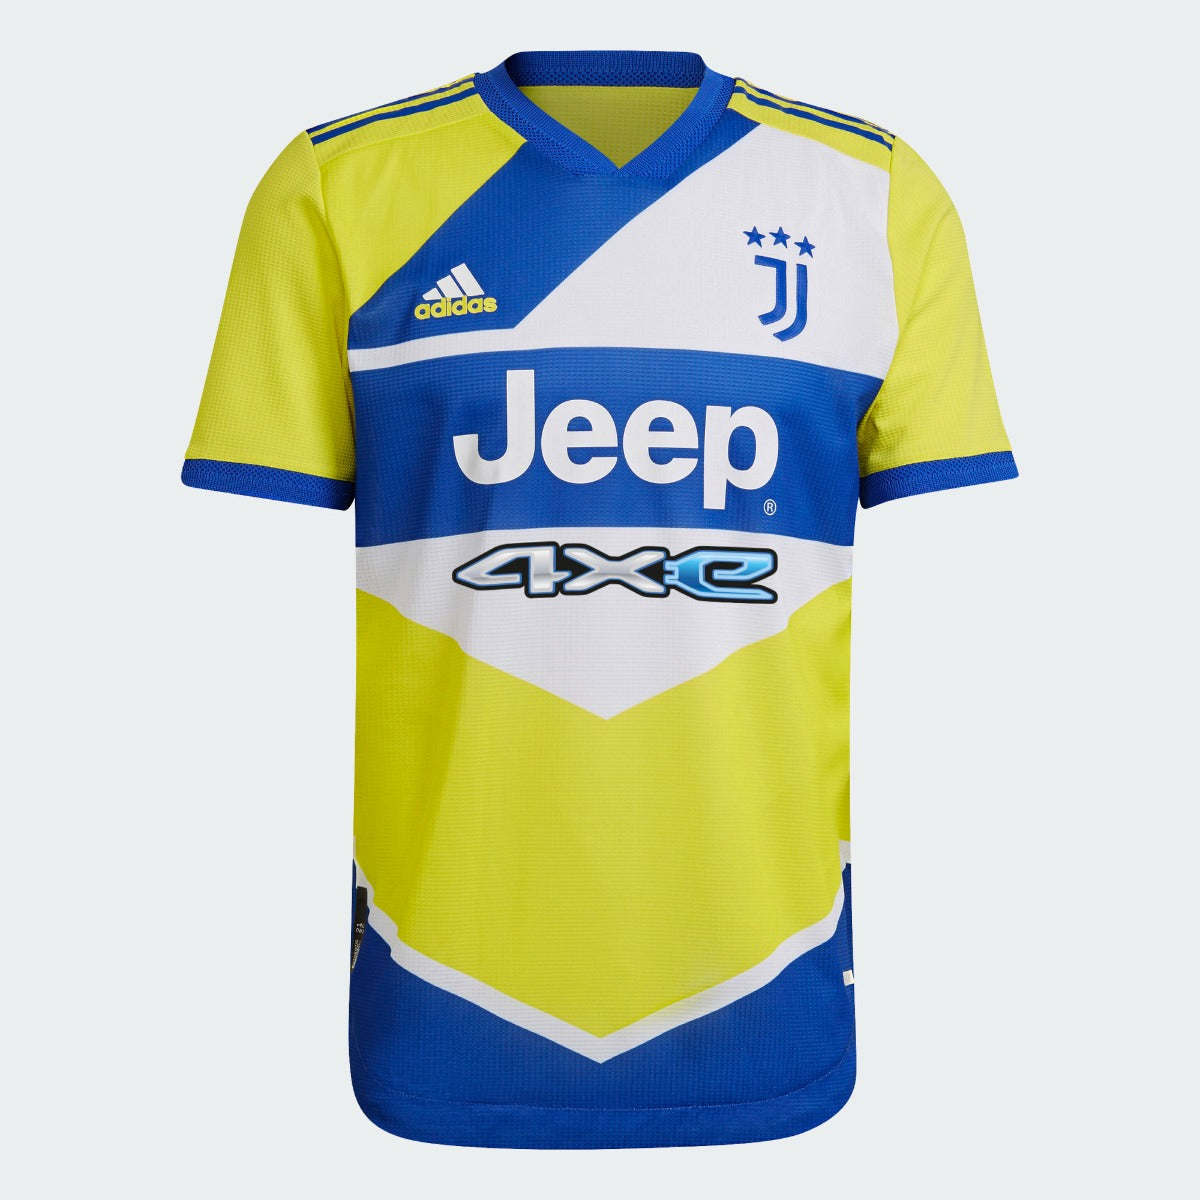 Adidas 2021-22 Juventus Authentic Third Jersey - Yellow-Royal-White (Front)